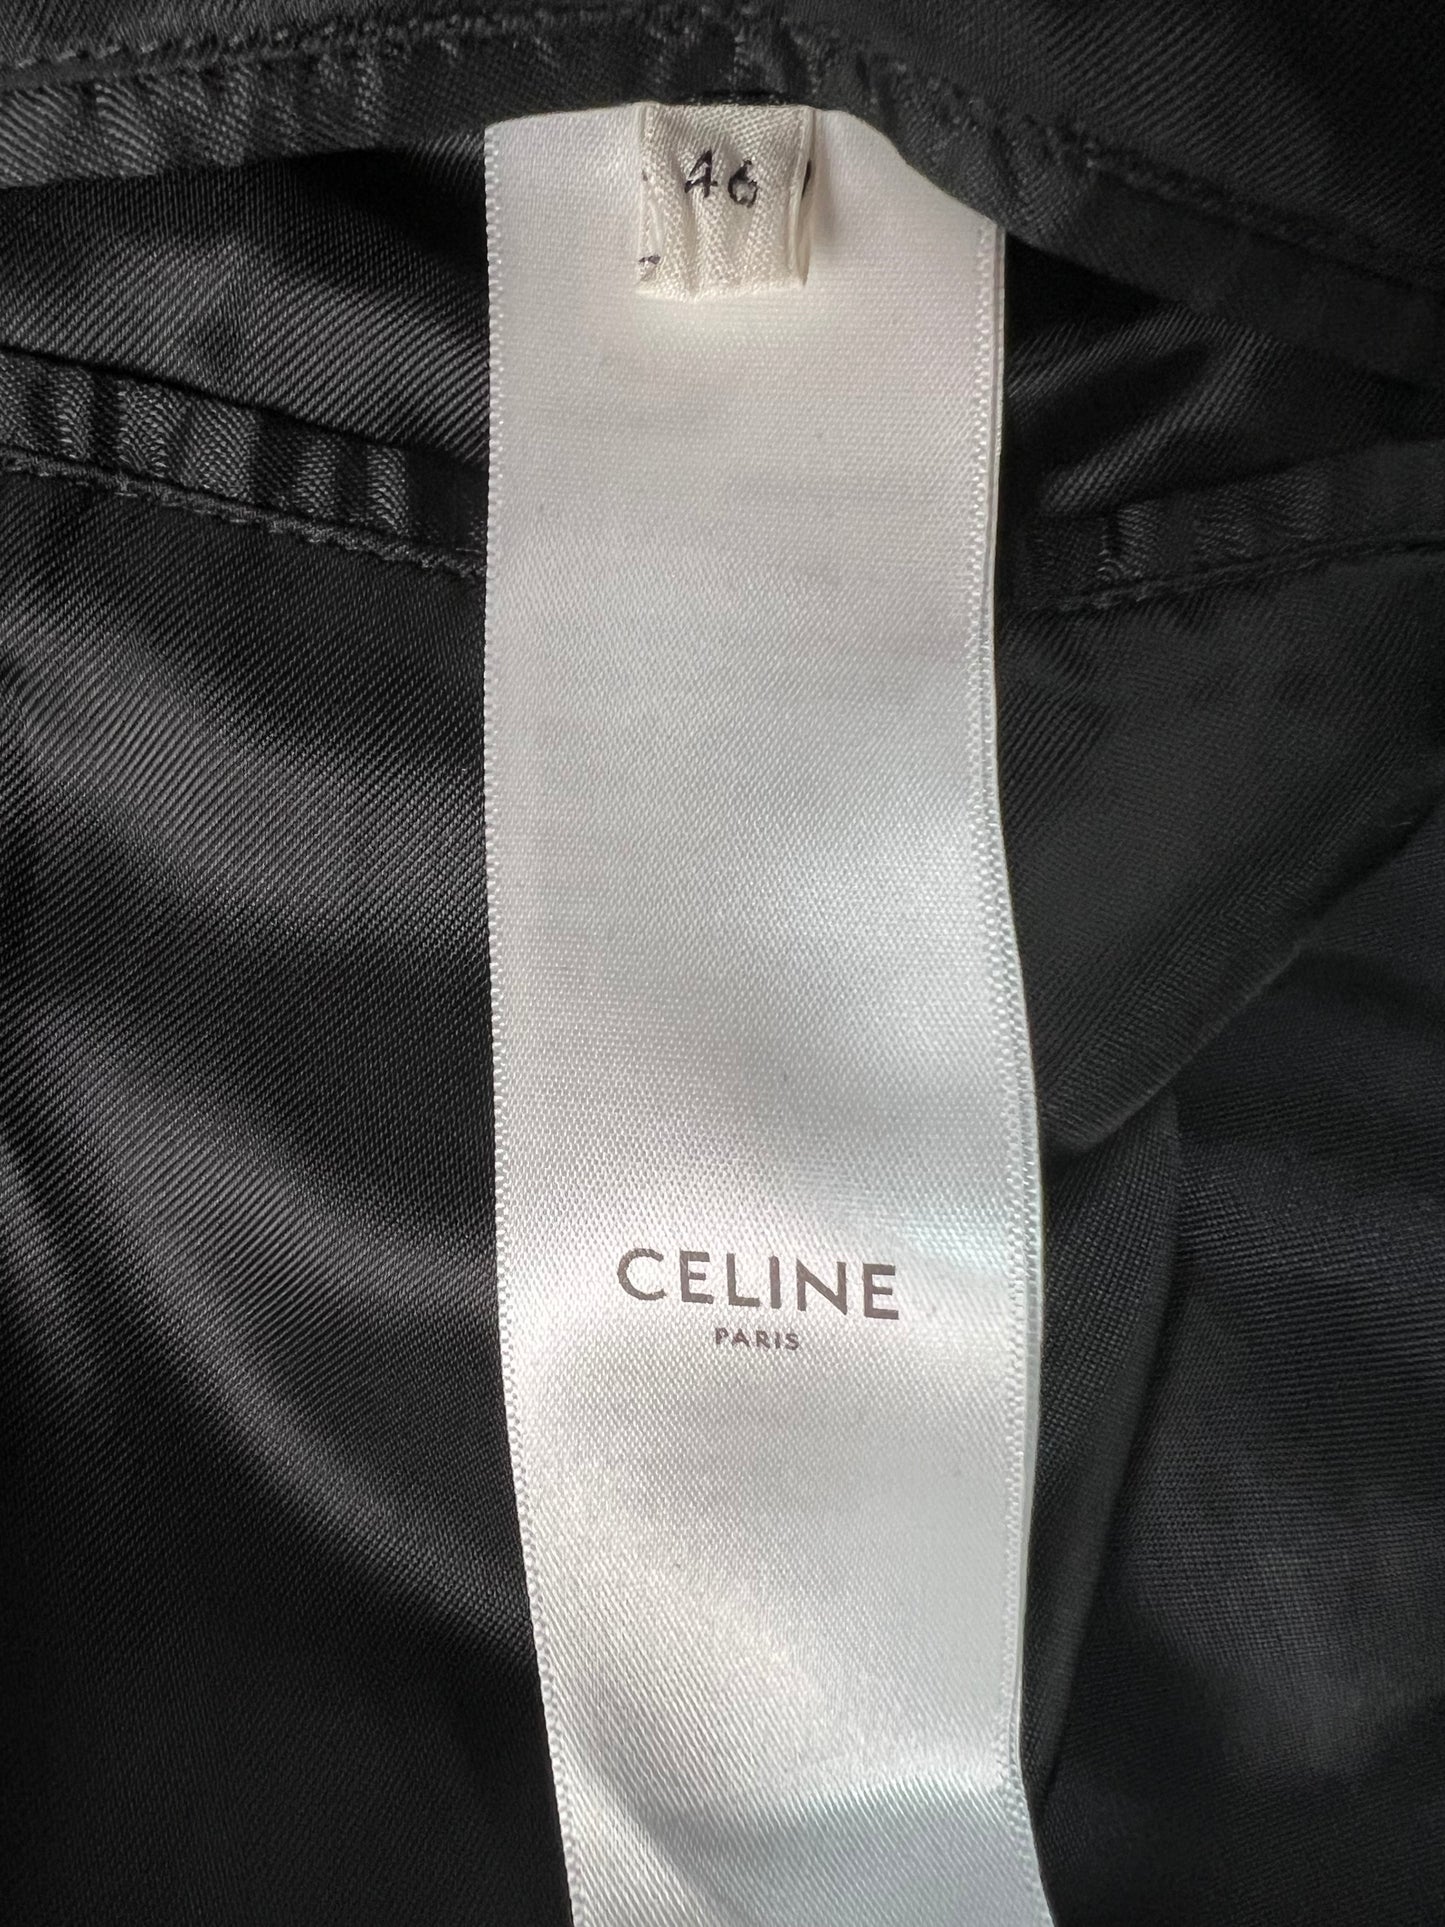 Celine AW19 hedi slimane runway western teddy Jacket black white SZ:46